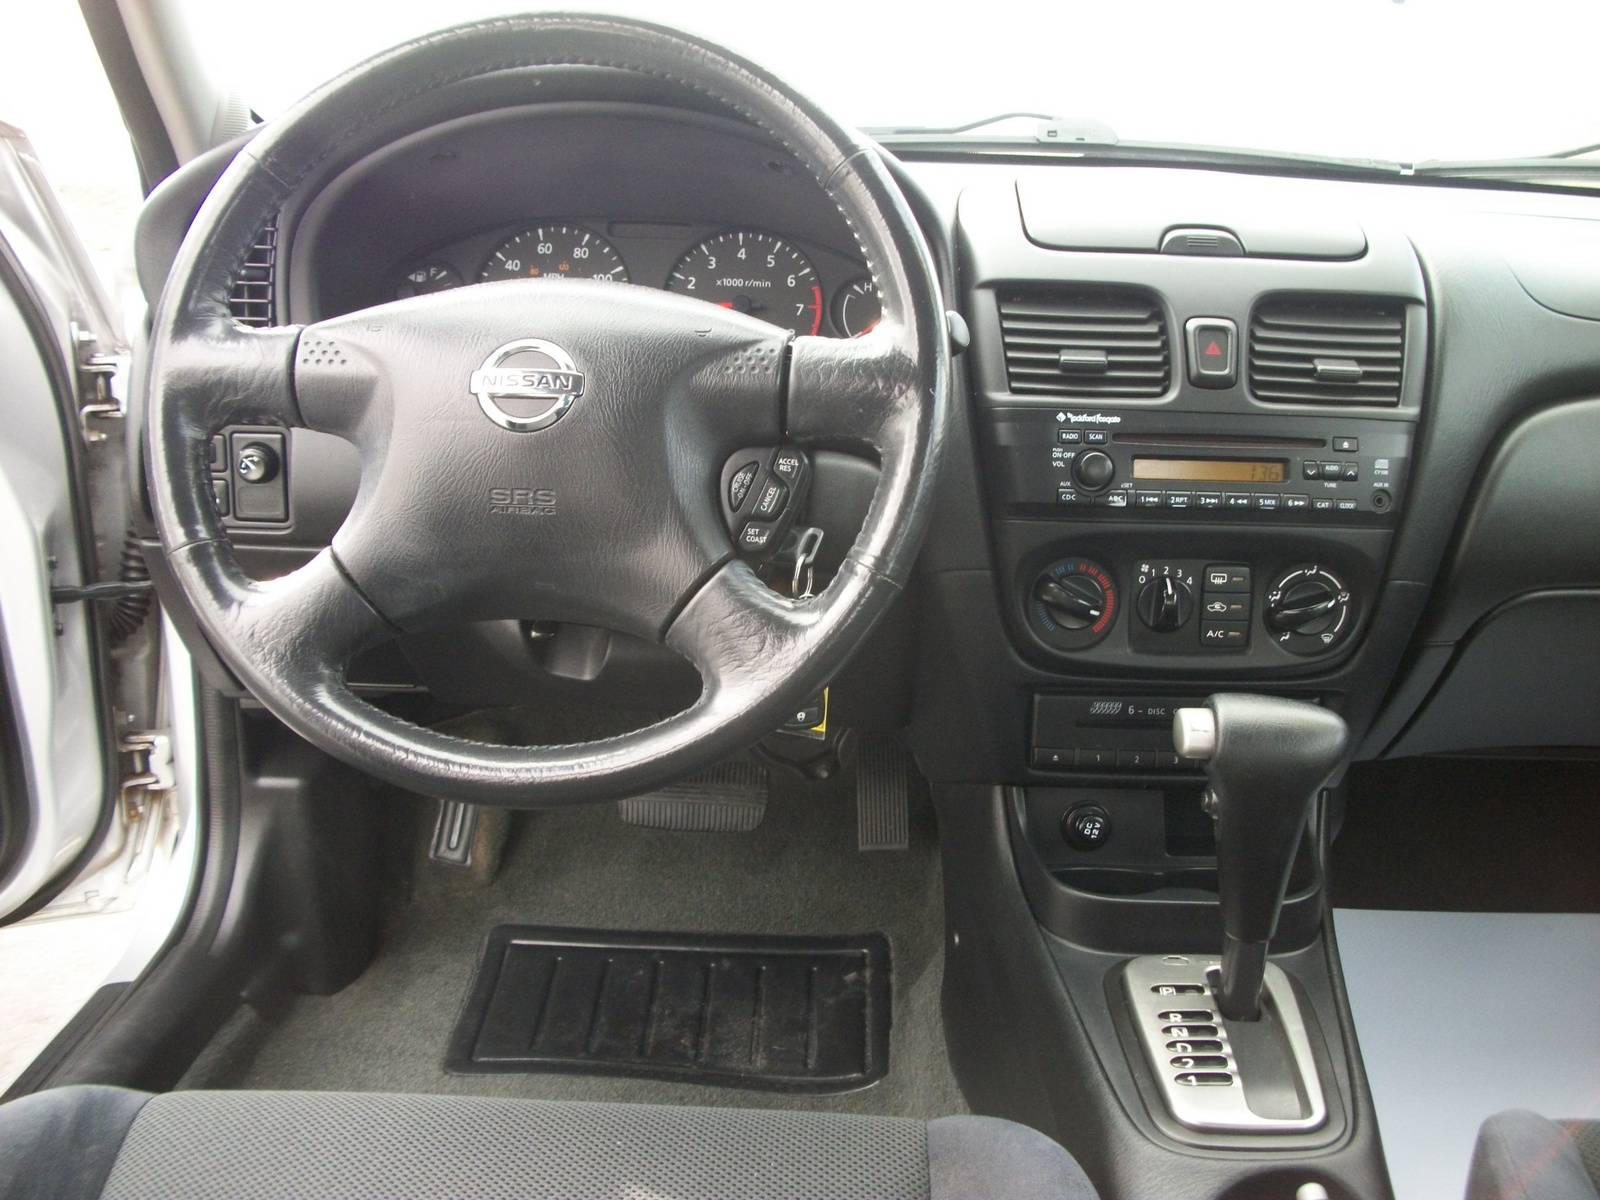 2006 Nissan sentra interior pictures #2